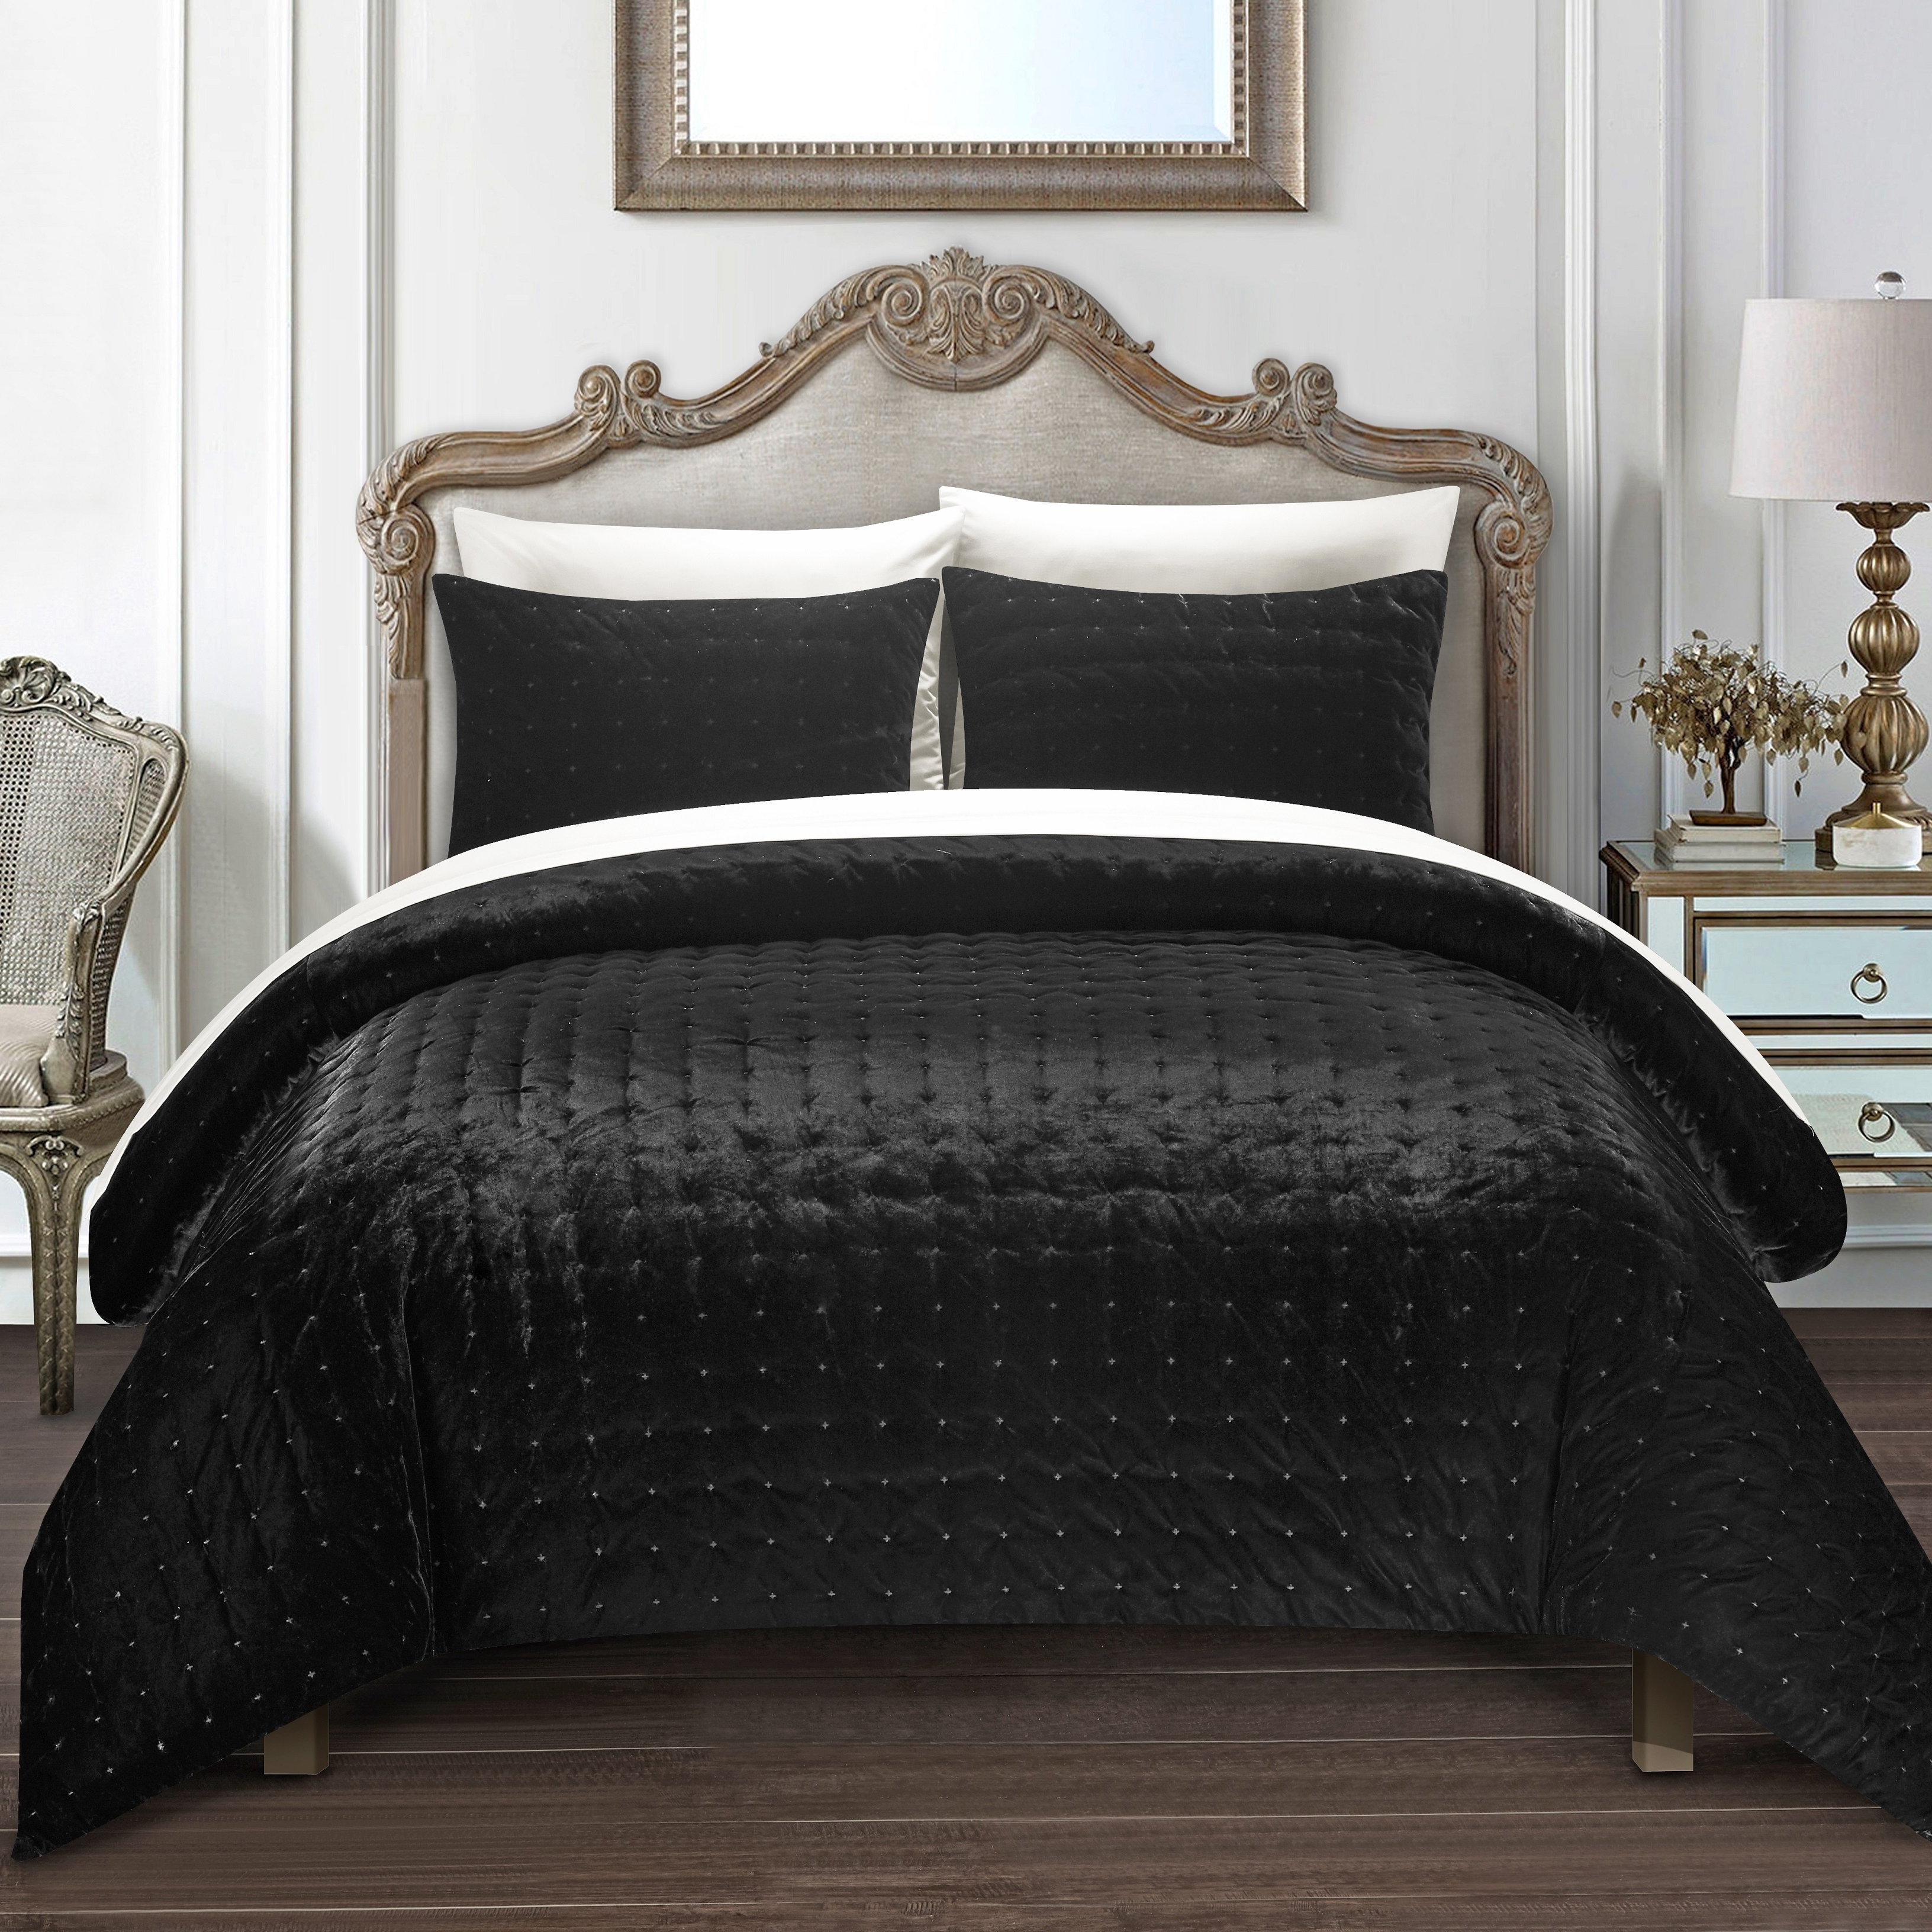 Chyna 3 Piece Comforter Set Luxurious Velvet Bedding - Teal, King